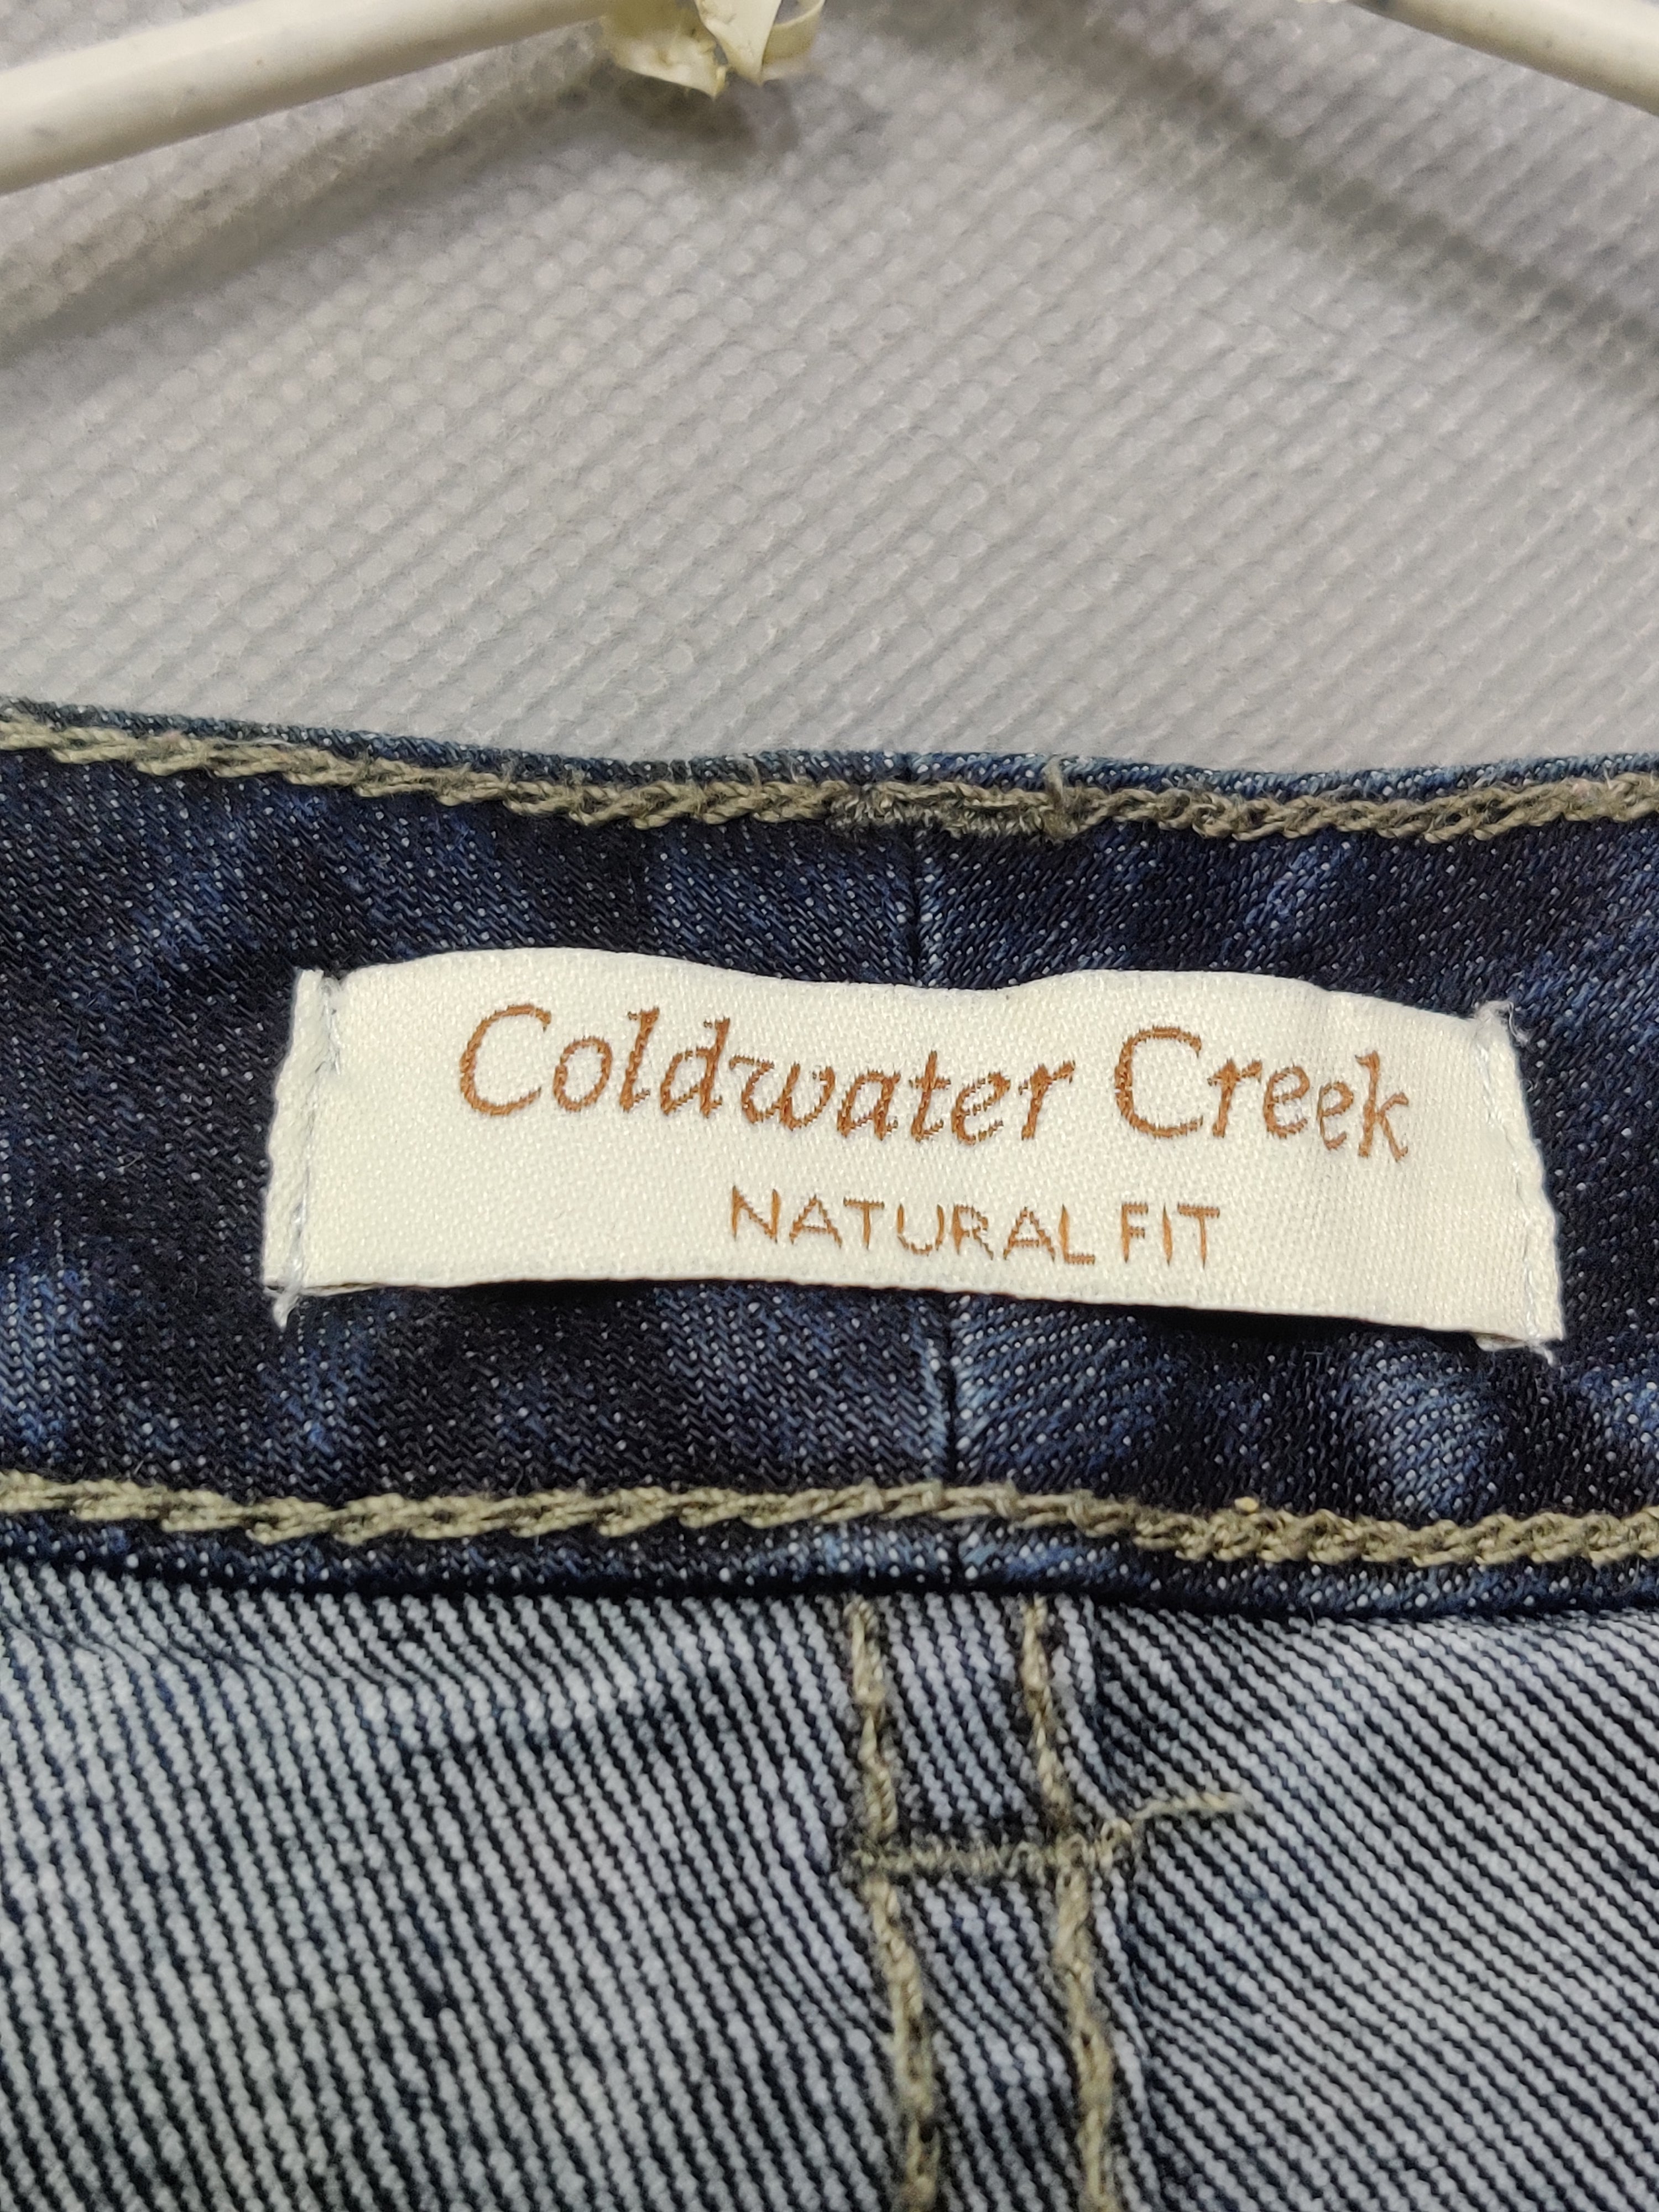 Coldwater Creek Branded Original Cotton Short For Men